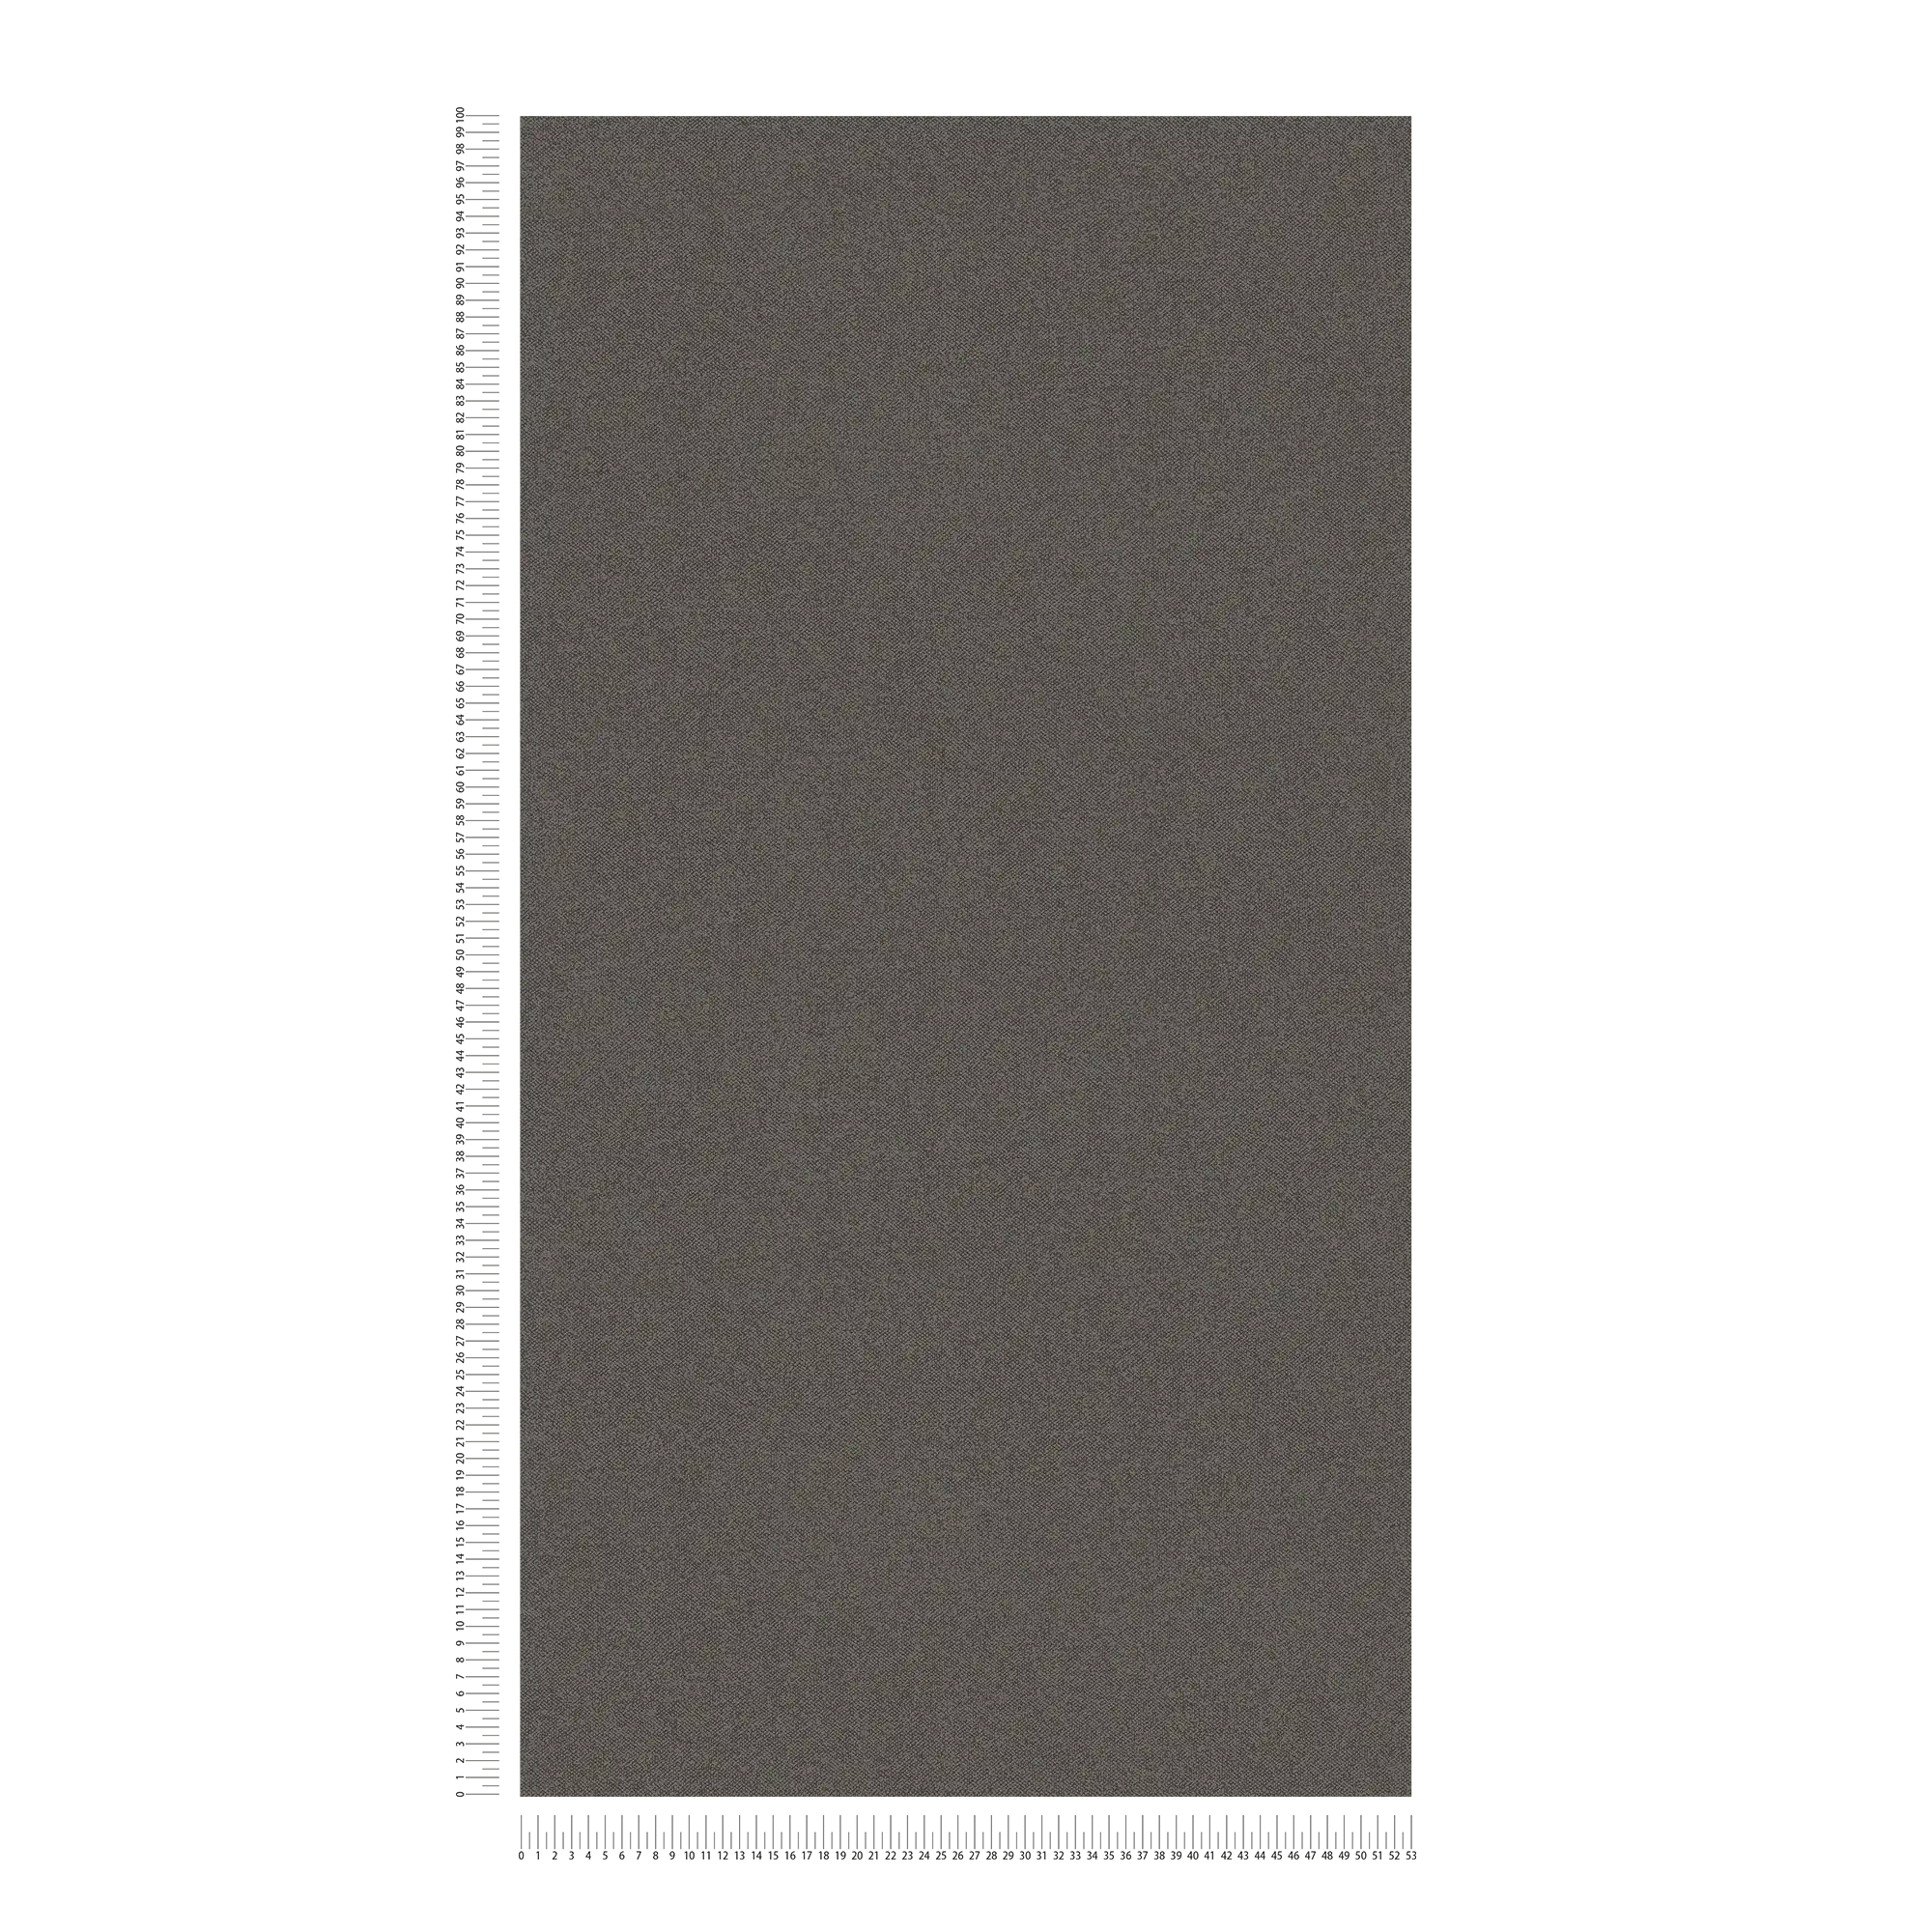             Plain wallpaper with linen look - brown, black
        